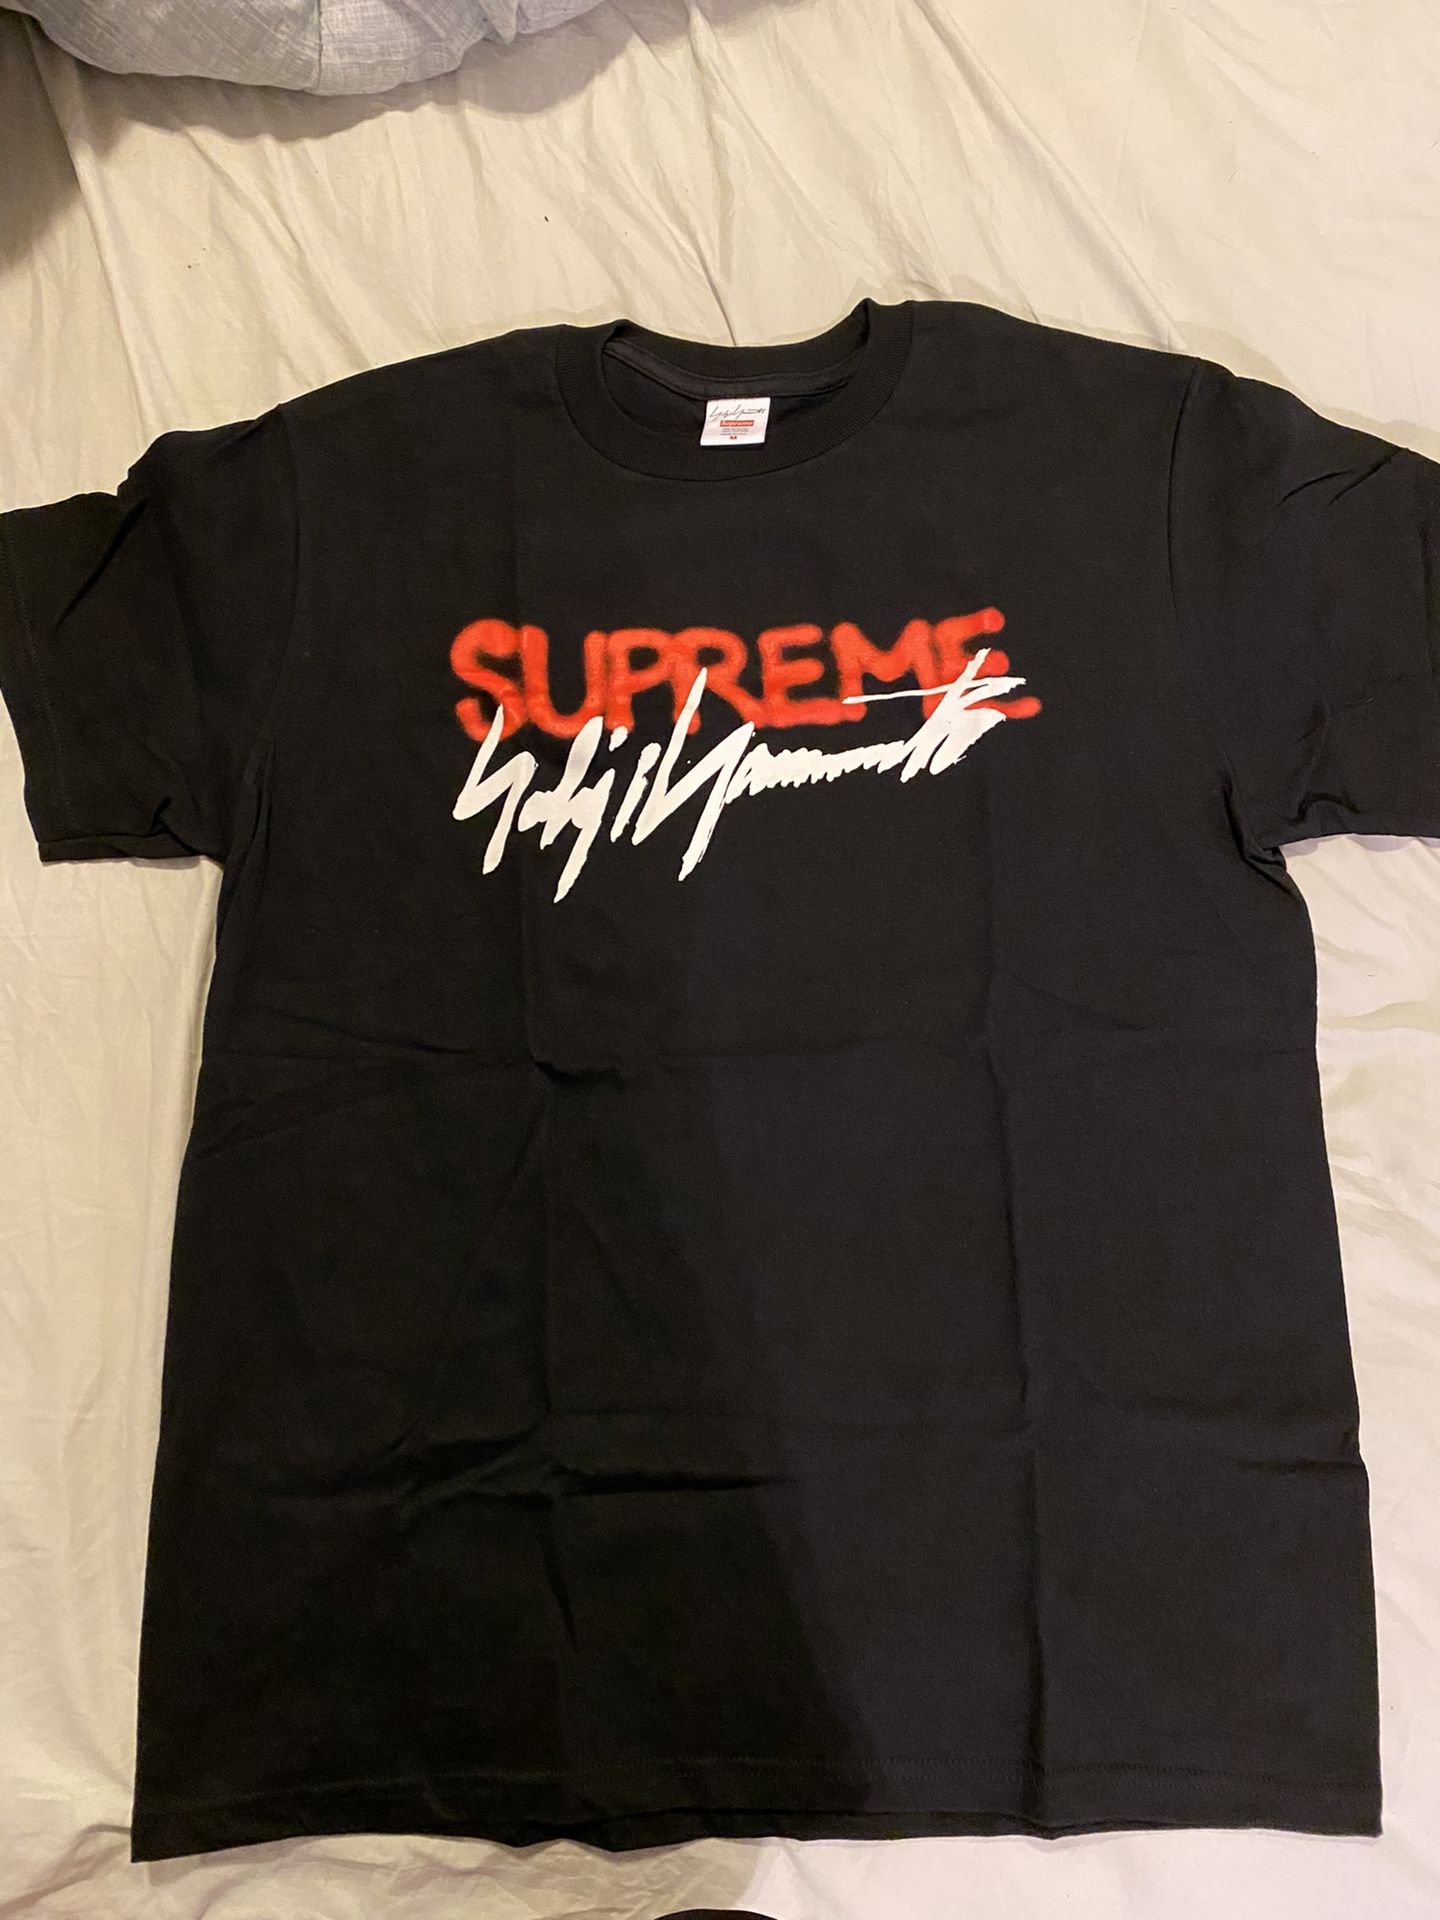 Supreme/Yohji Yamamoto t-shirt